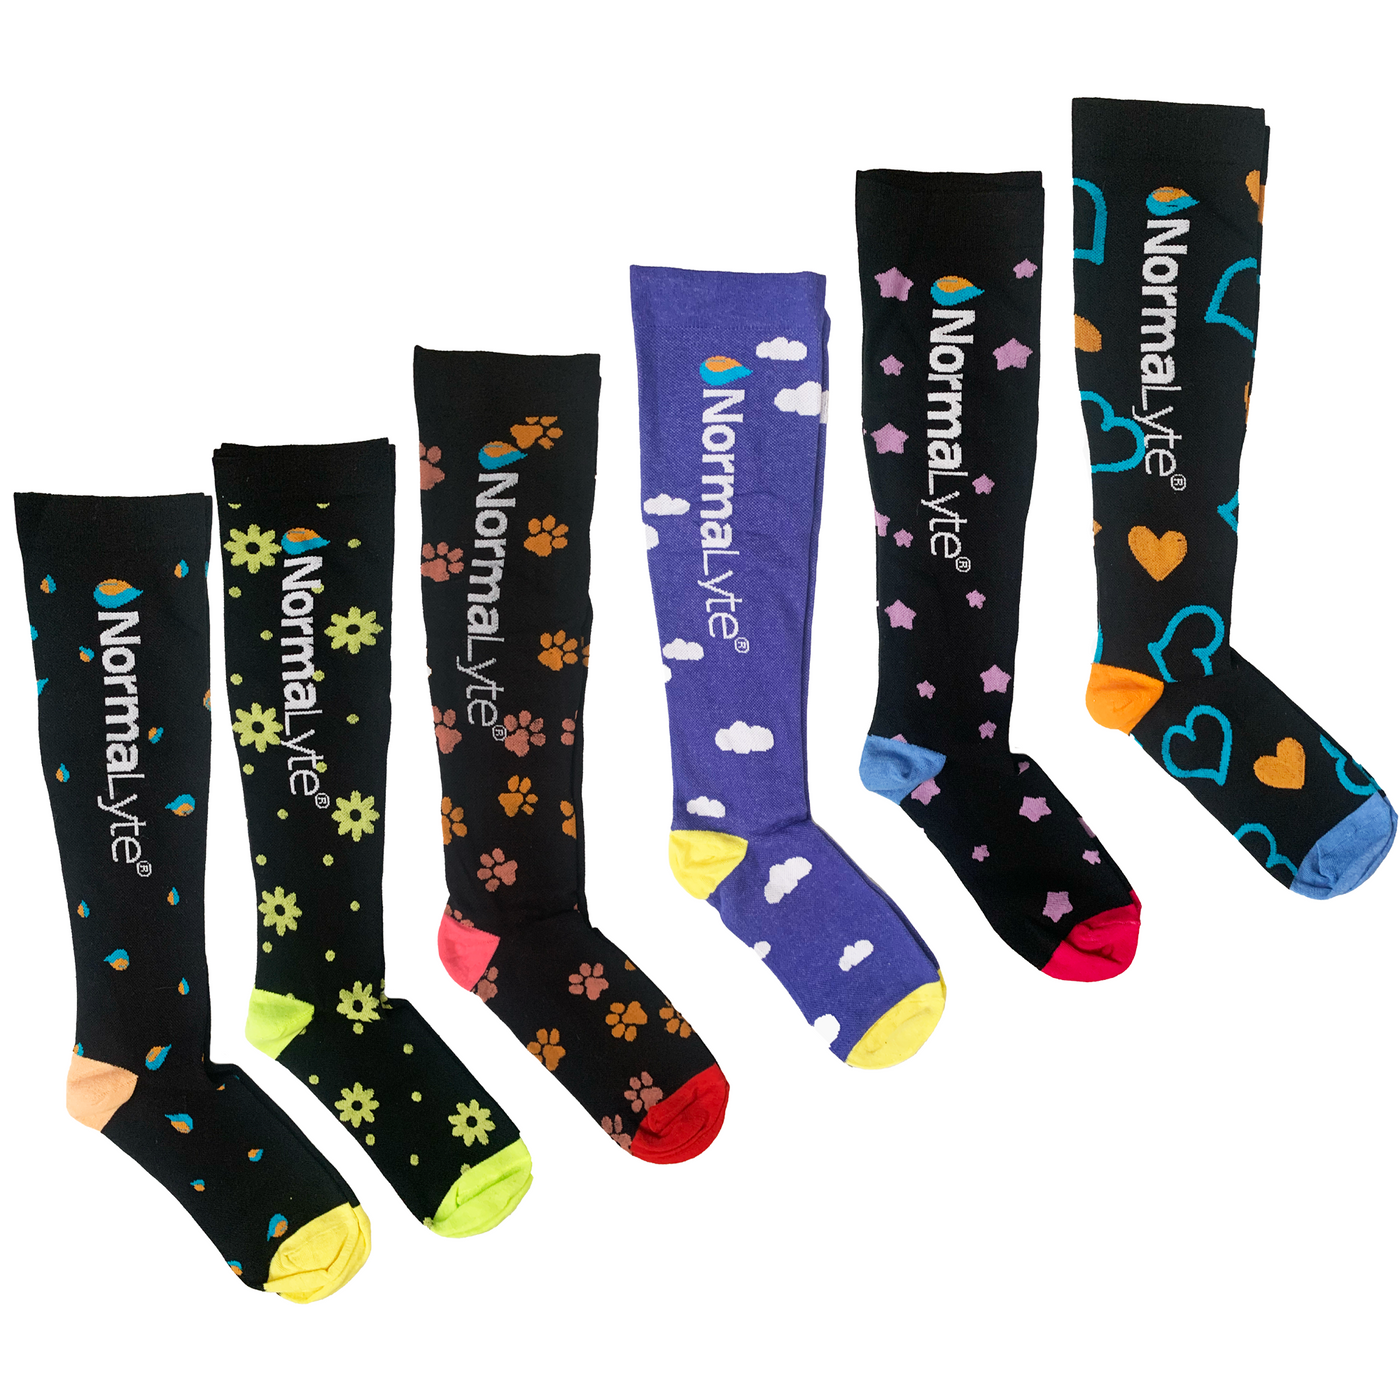 3-Pack of Fun Graduated Compression Socks (Random Selection): 20-30mmH